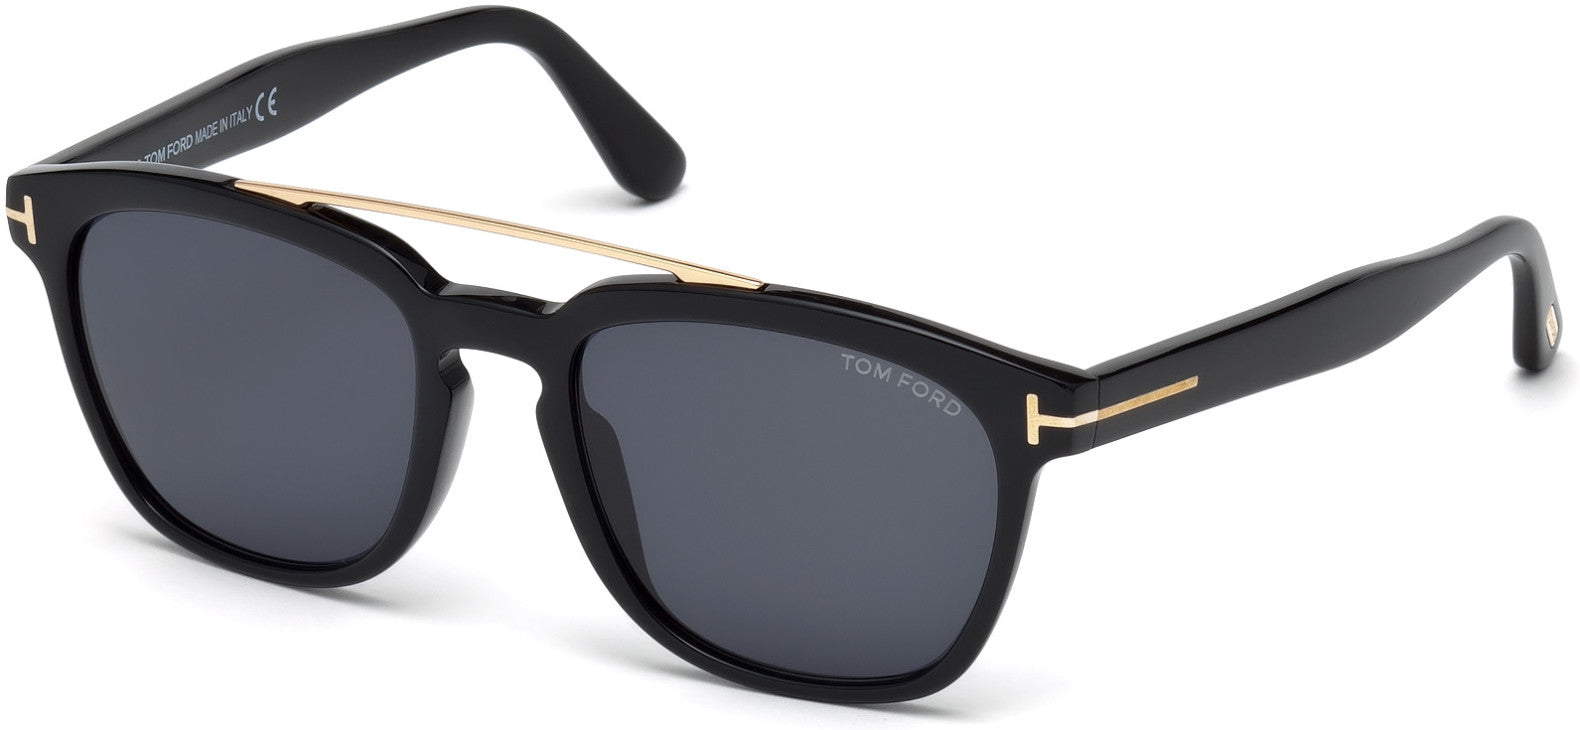 Tom Ford FT0516 Holt Geometric Sunglasses 01A-01A - Shiny Black Front & Temple, Shiny Rose Gold Brow Bar/ Smoke Lenses